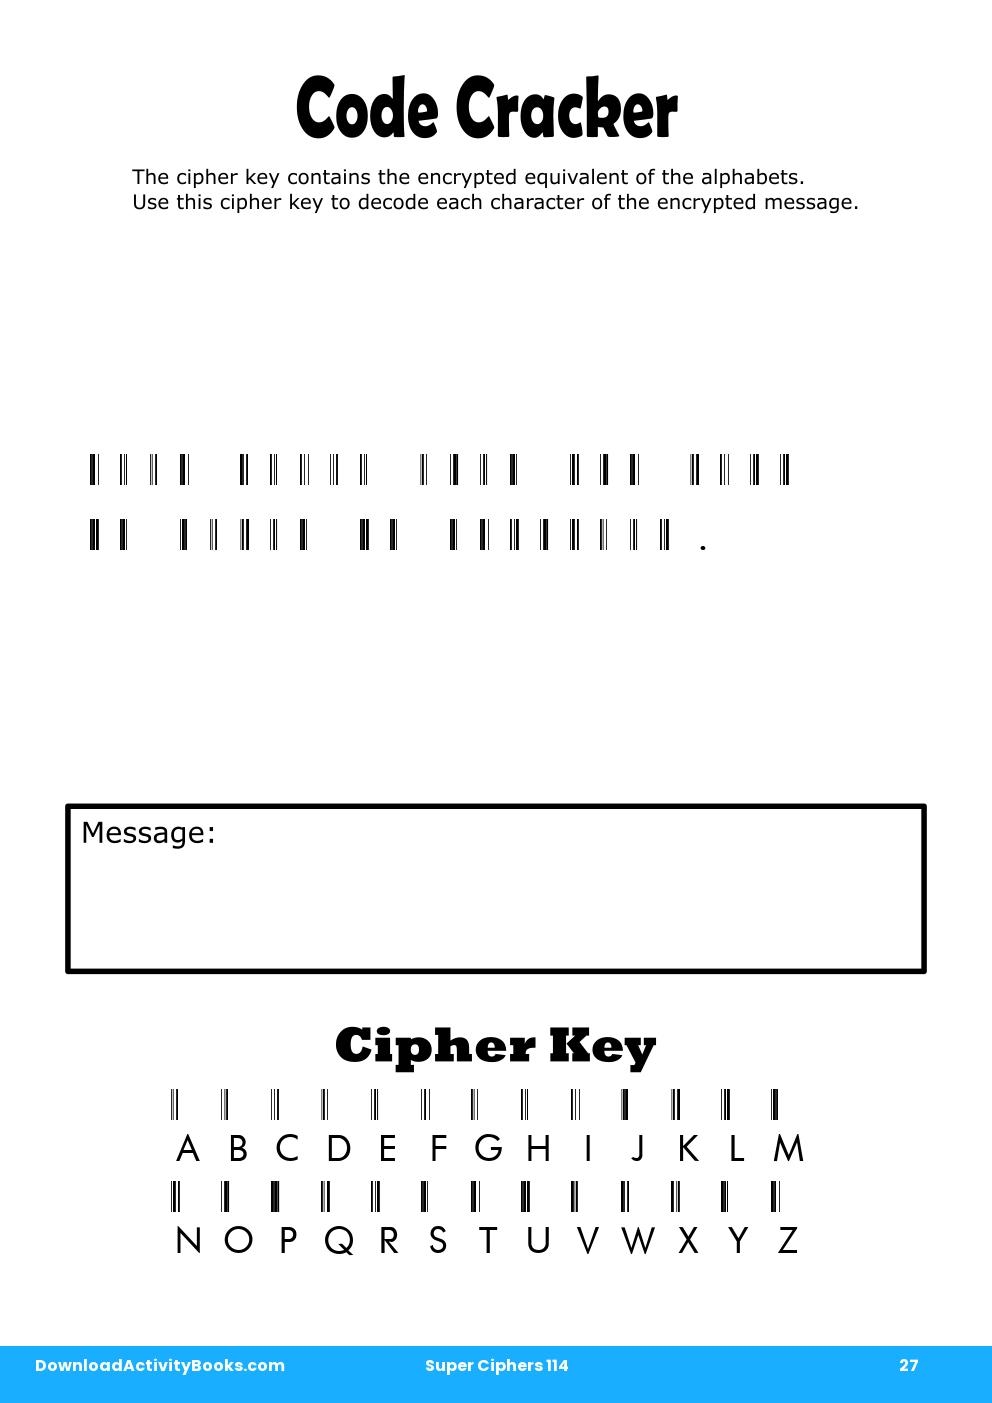 Code Cracker in Super Ciphers 114